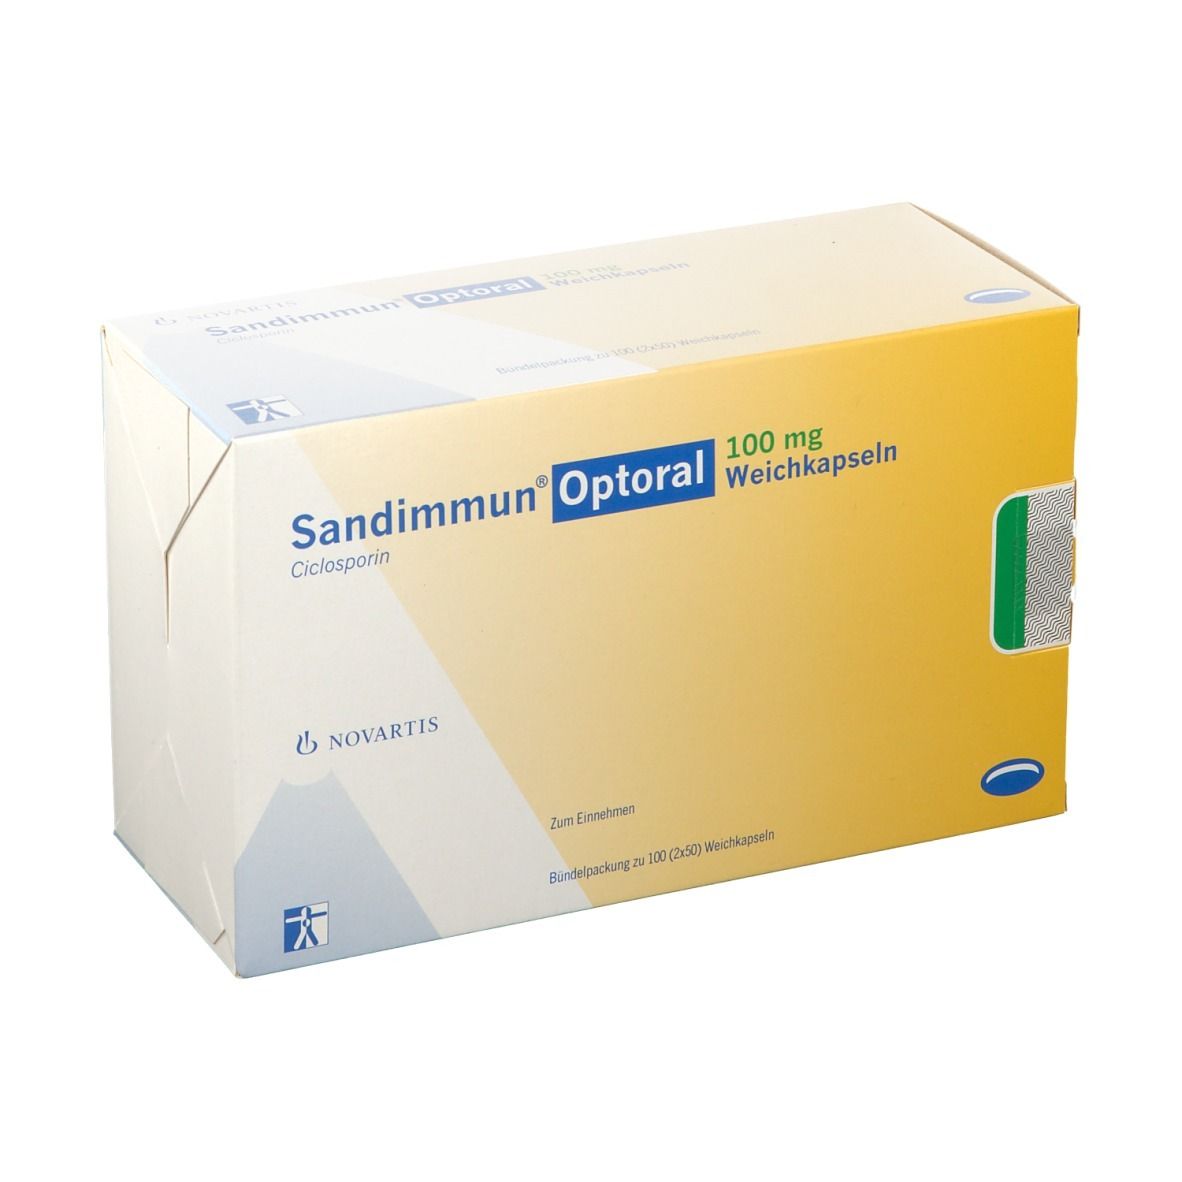 Sandimmun® Optoral 100 mg